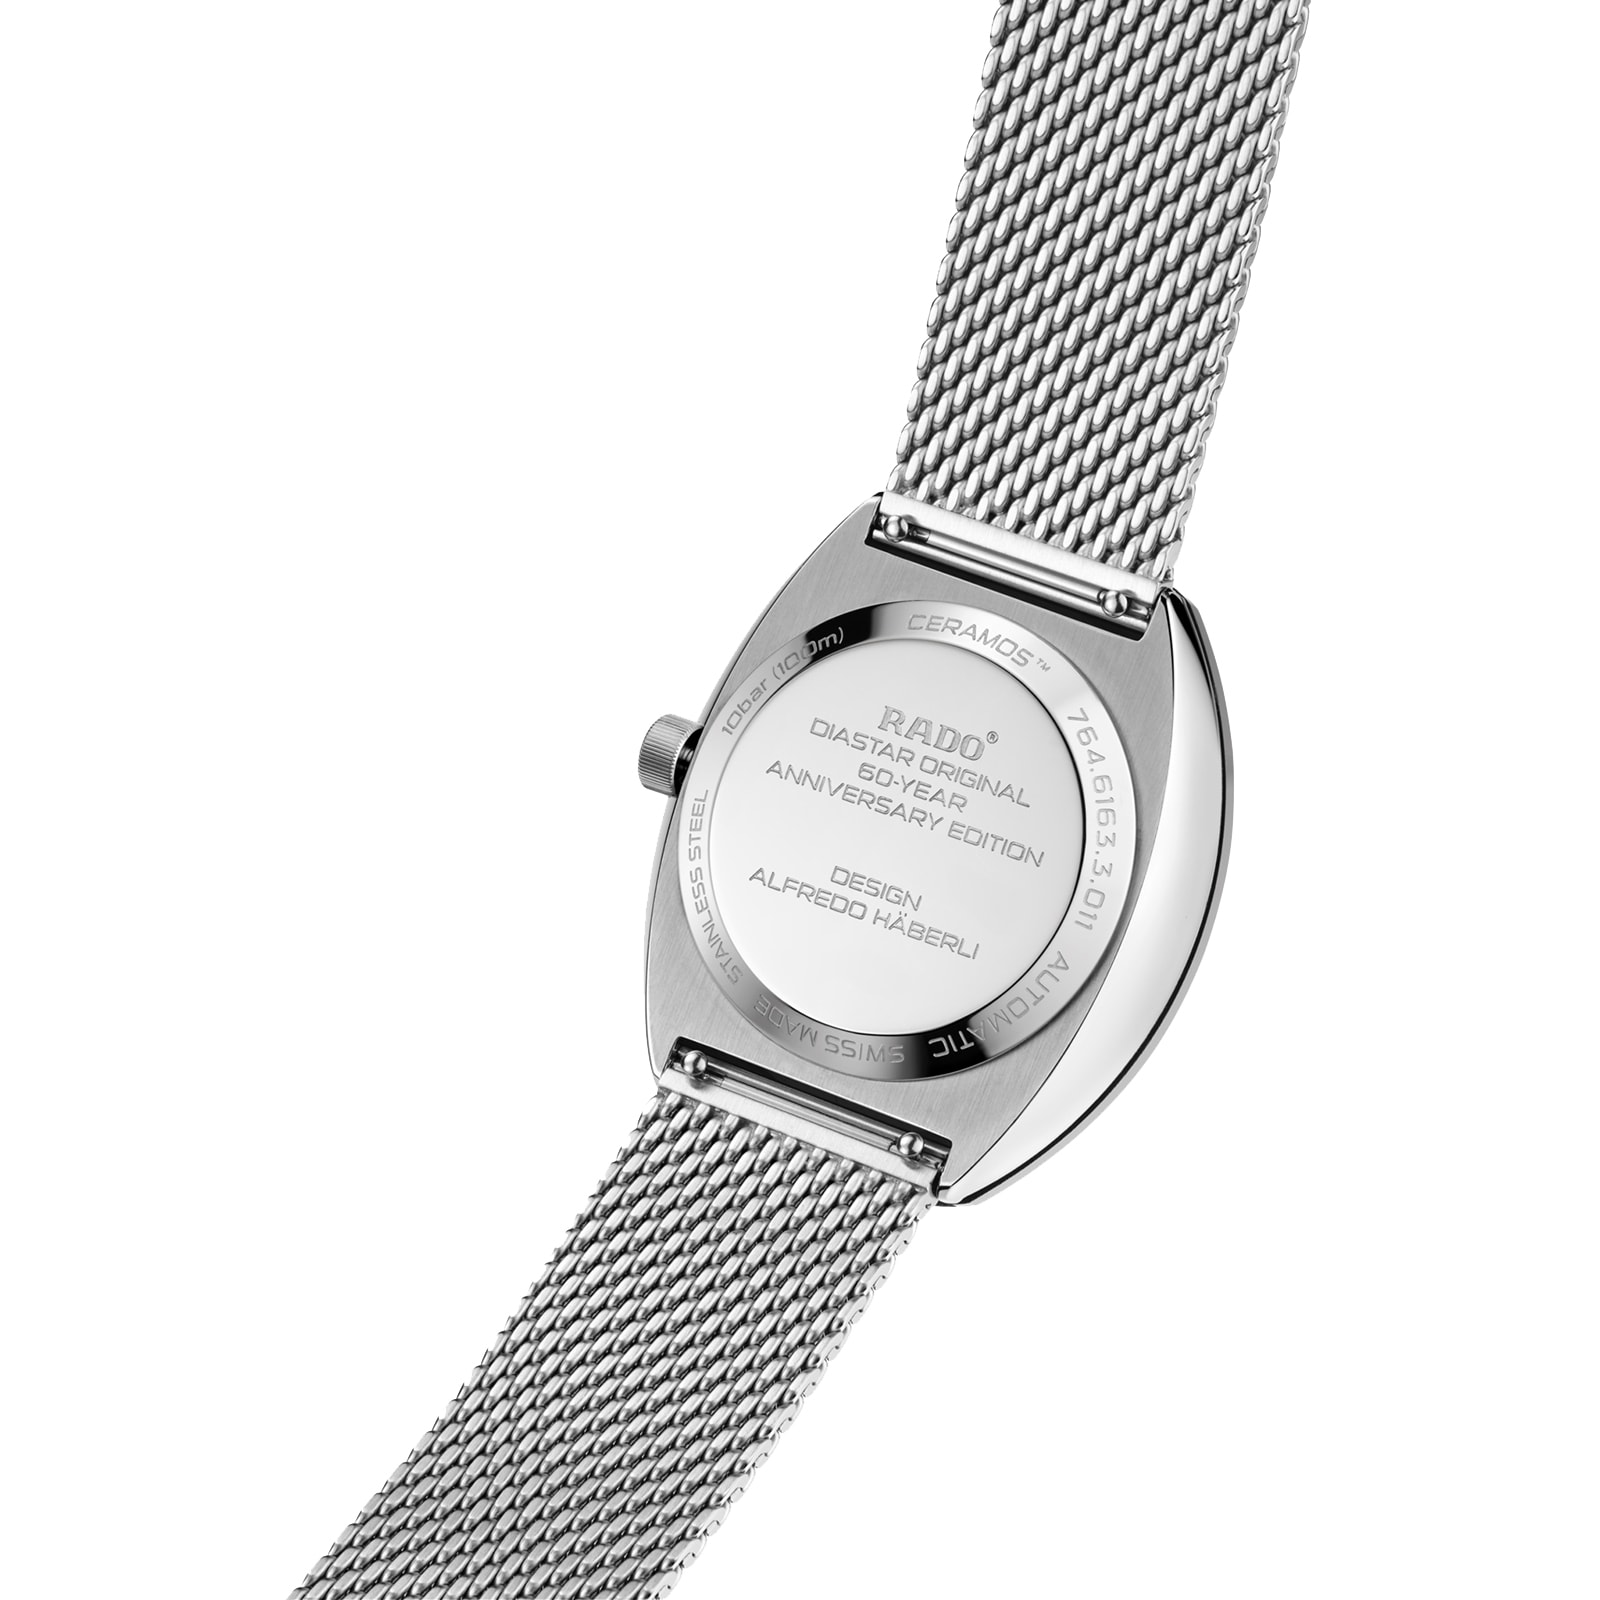 RADO Diastar Digital High-Tech Ceramic Bracelet Men's Watch 193.0433.3 |  Fast & Free US Shipping | Watch Warehouse